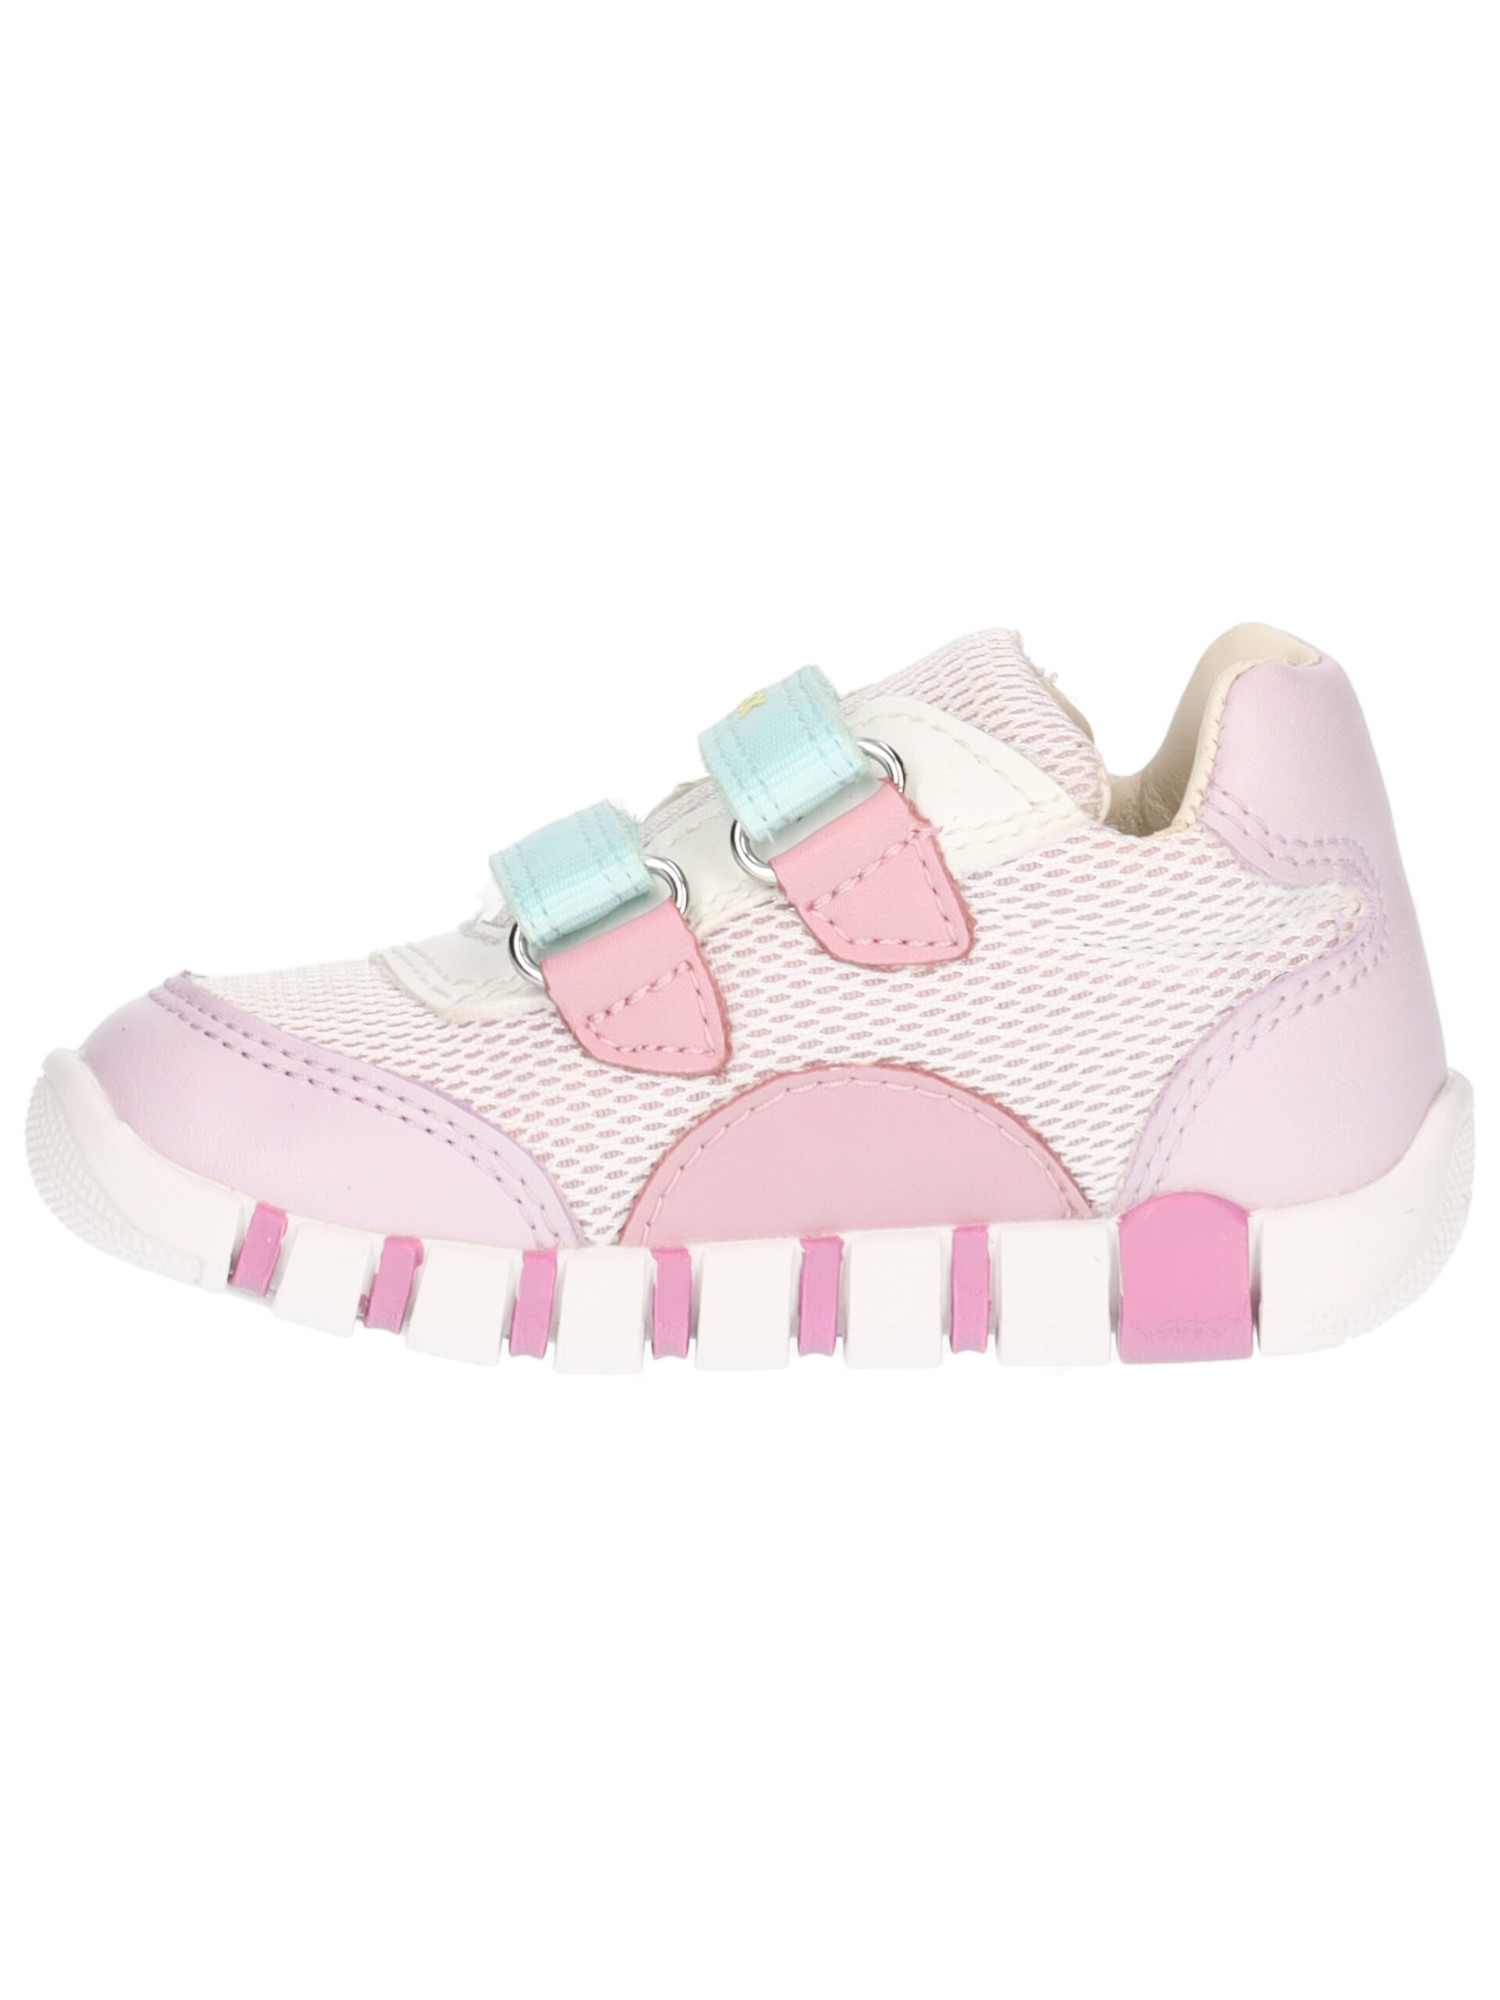 sneaker-geox-iupidoo-primi-passi-bambina-rosa-790041